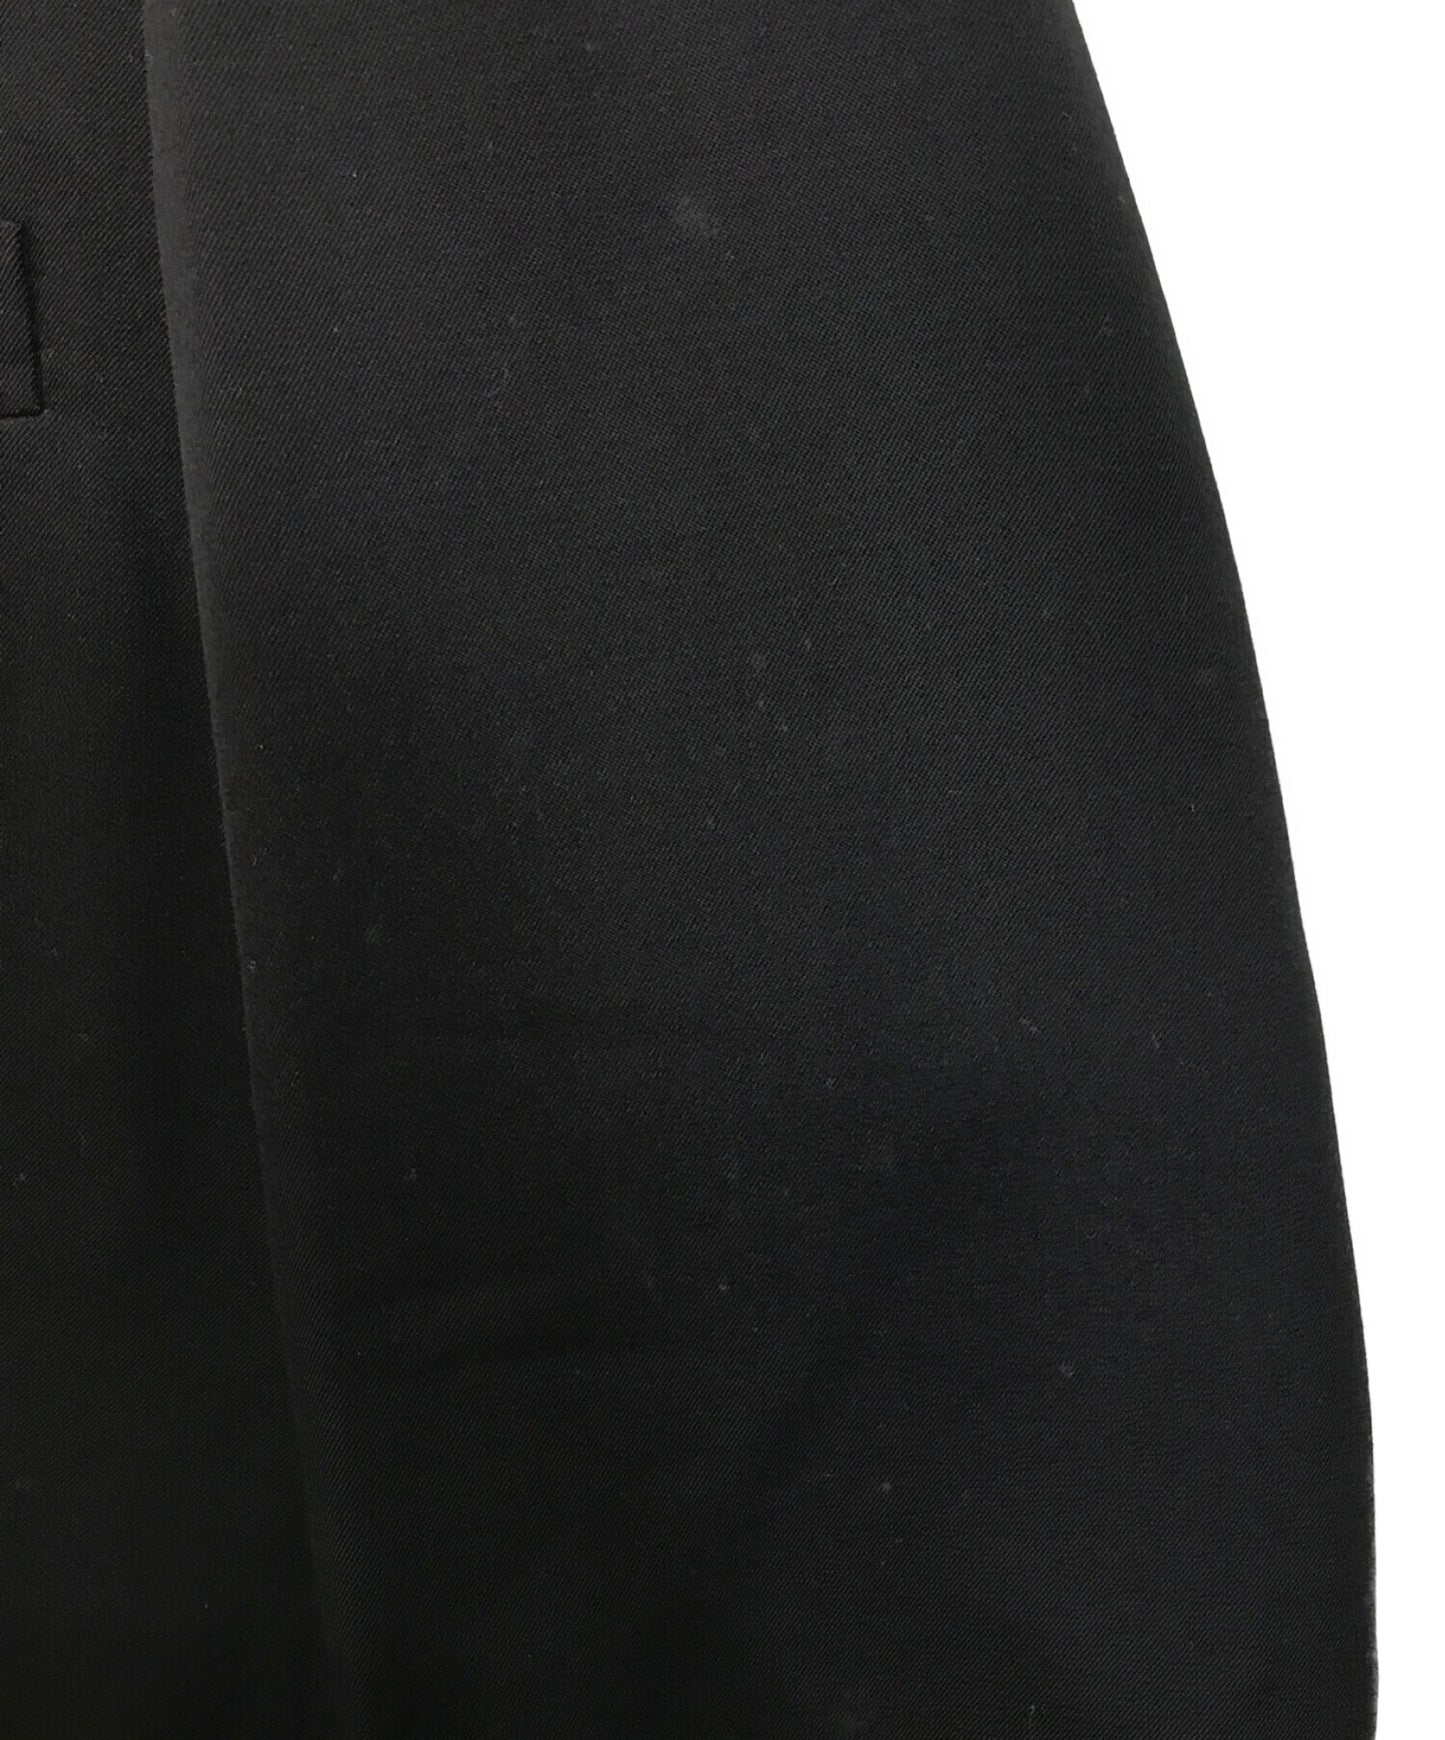 Yohji Yamamoto服裝D'Homme裁縫外套